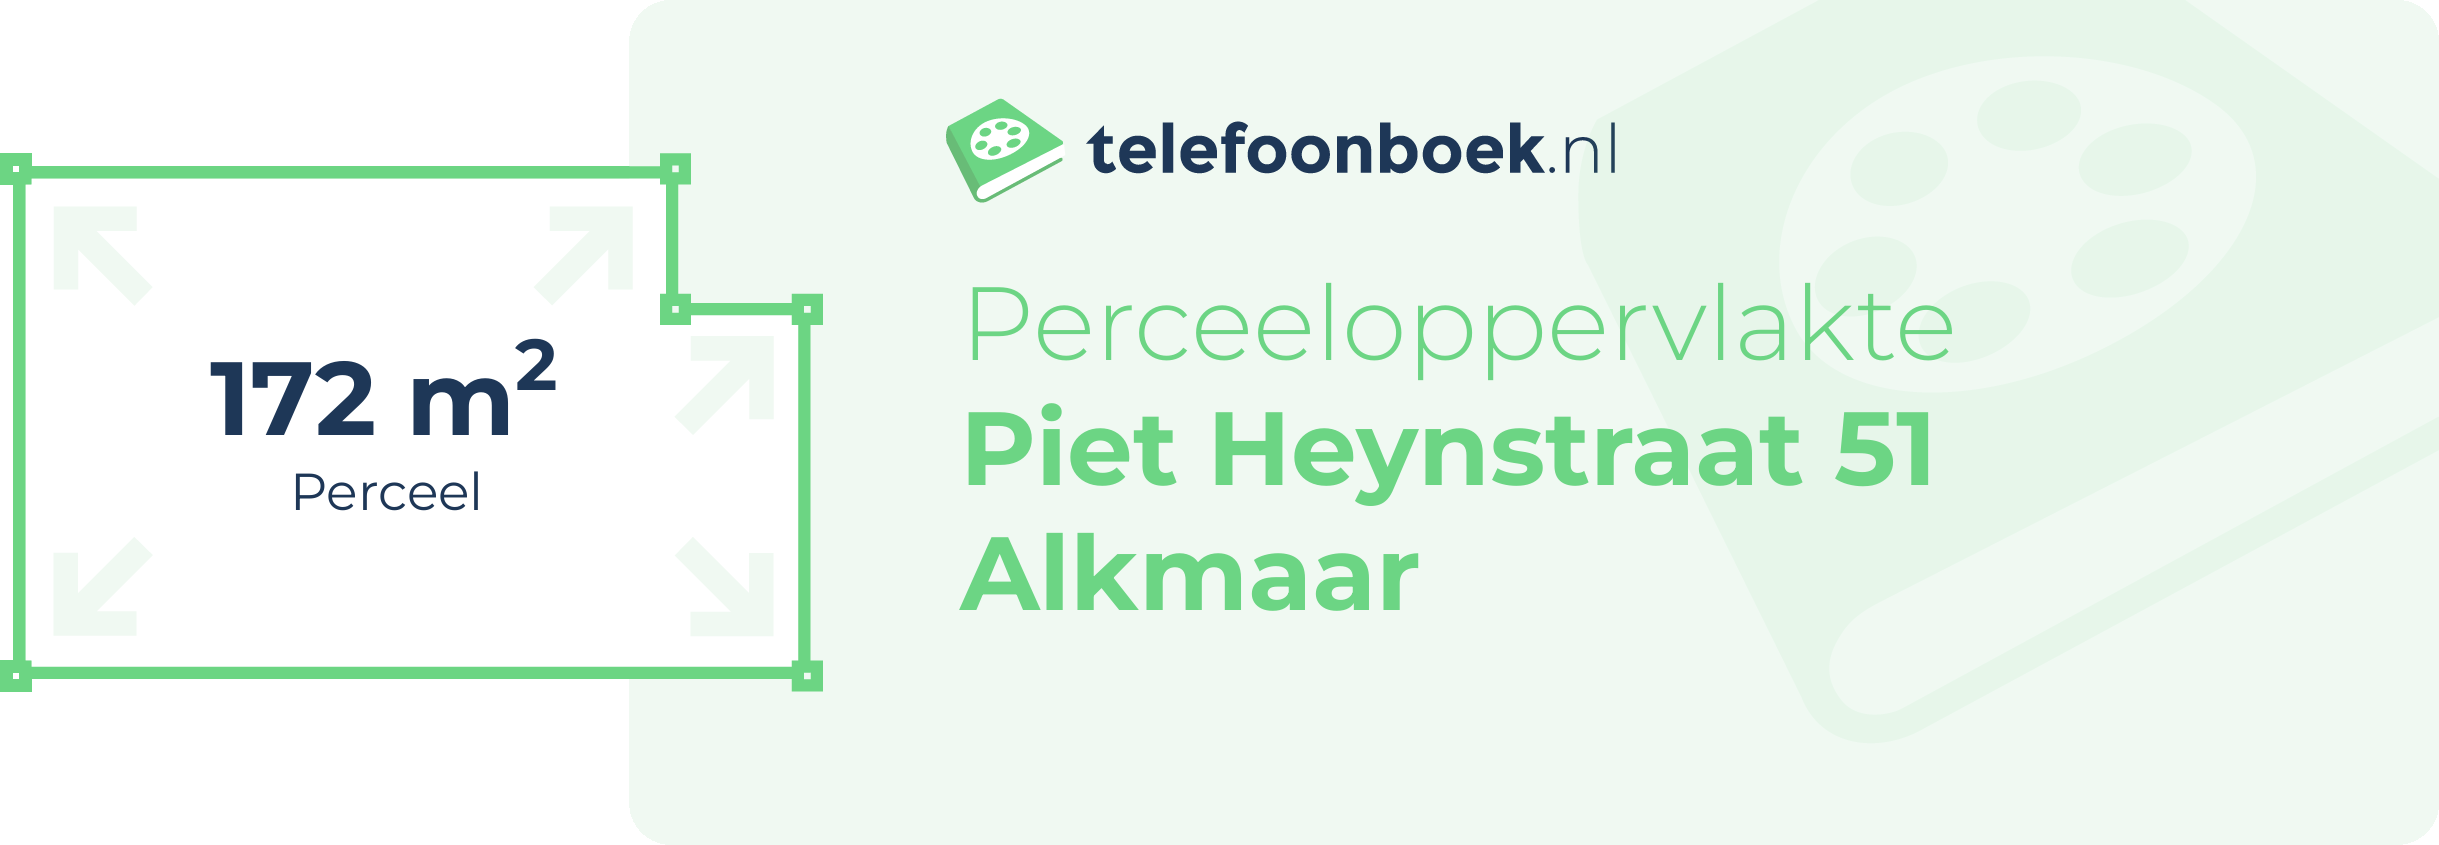 Perceeloppervlakte Piet Heynstraat 51 Alkmaar